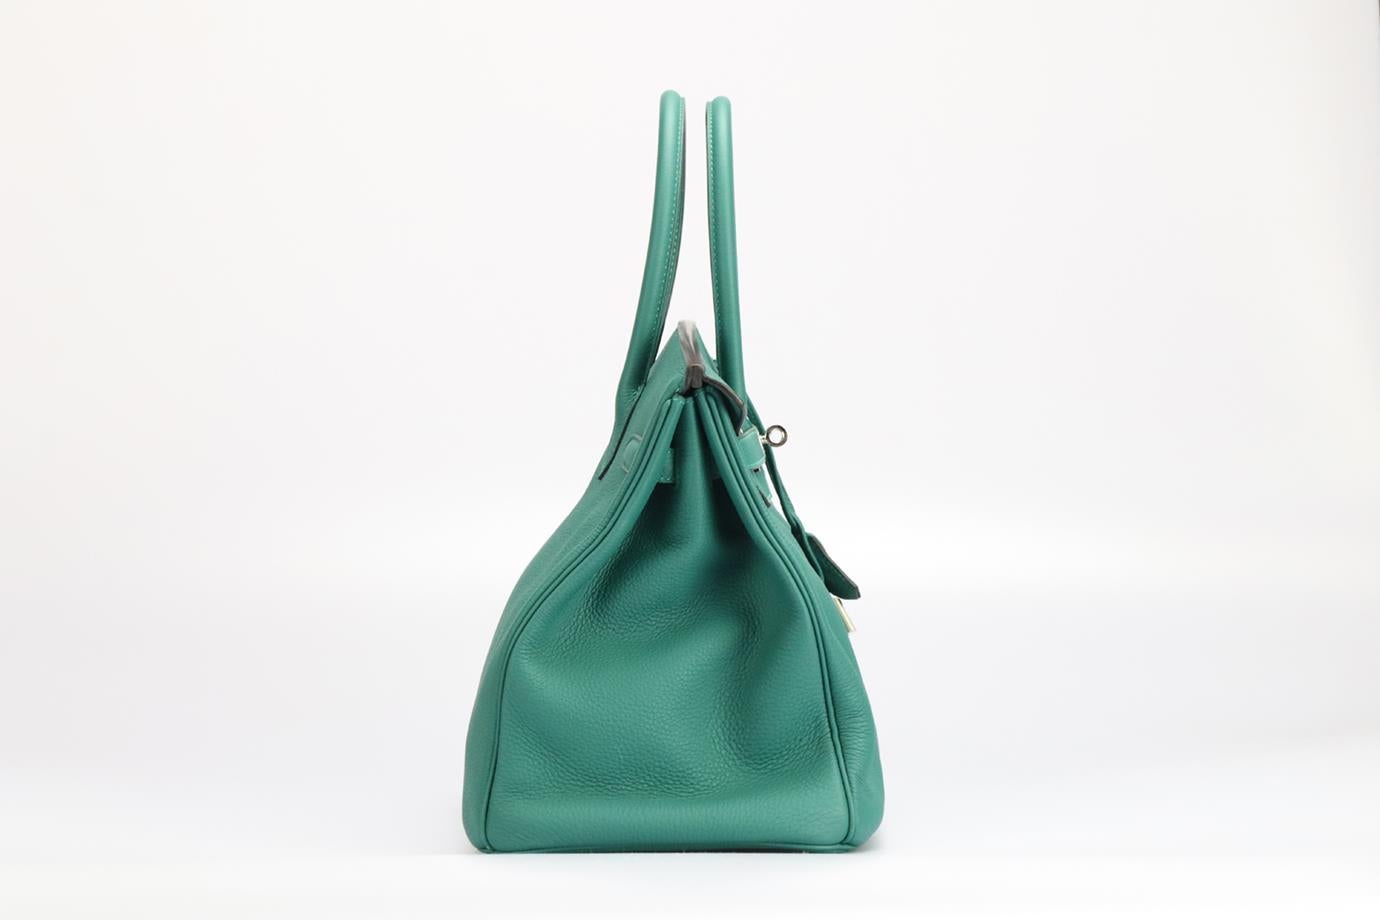 Hermès 2013 Birkin 35cm Maurice Leather Bag For Sale 1